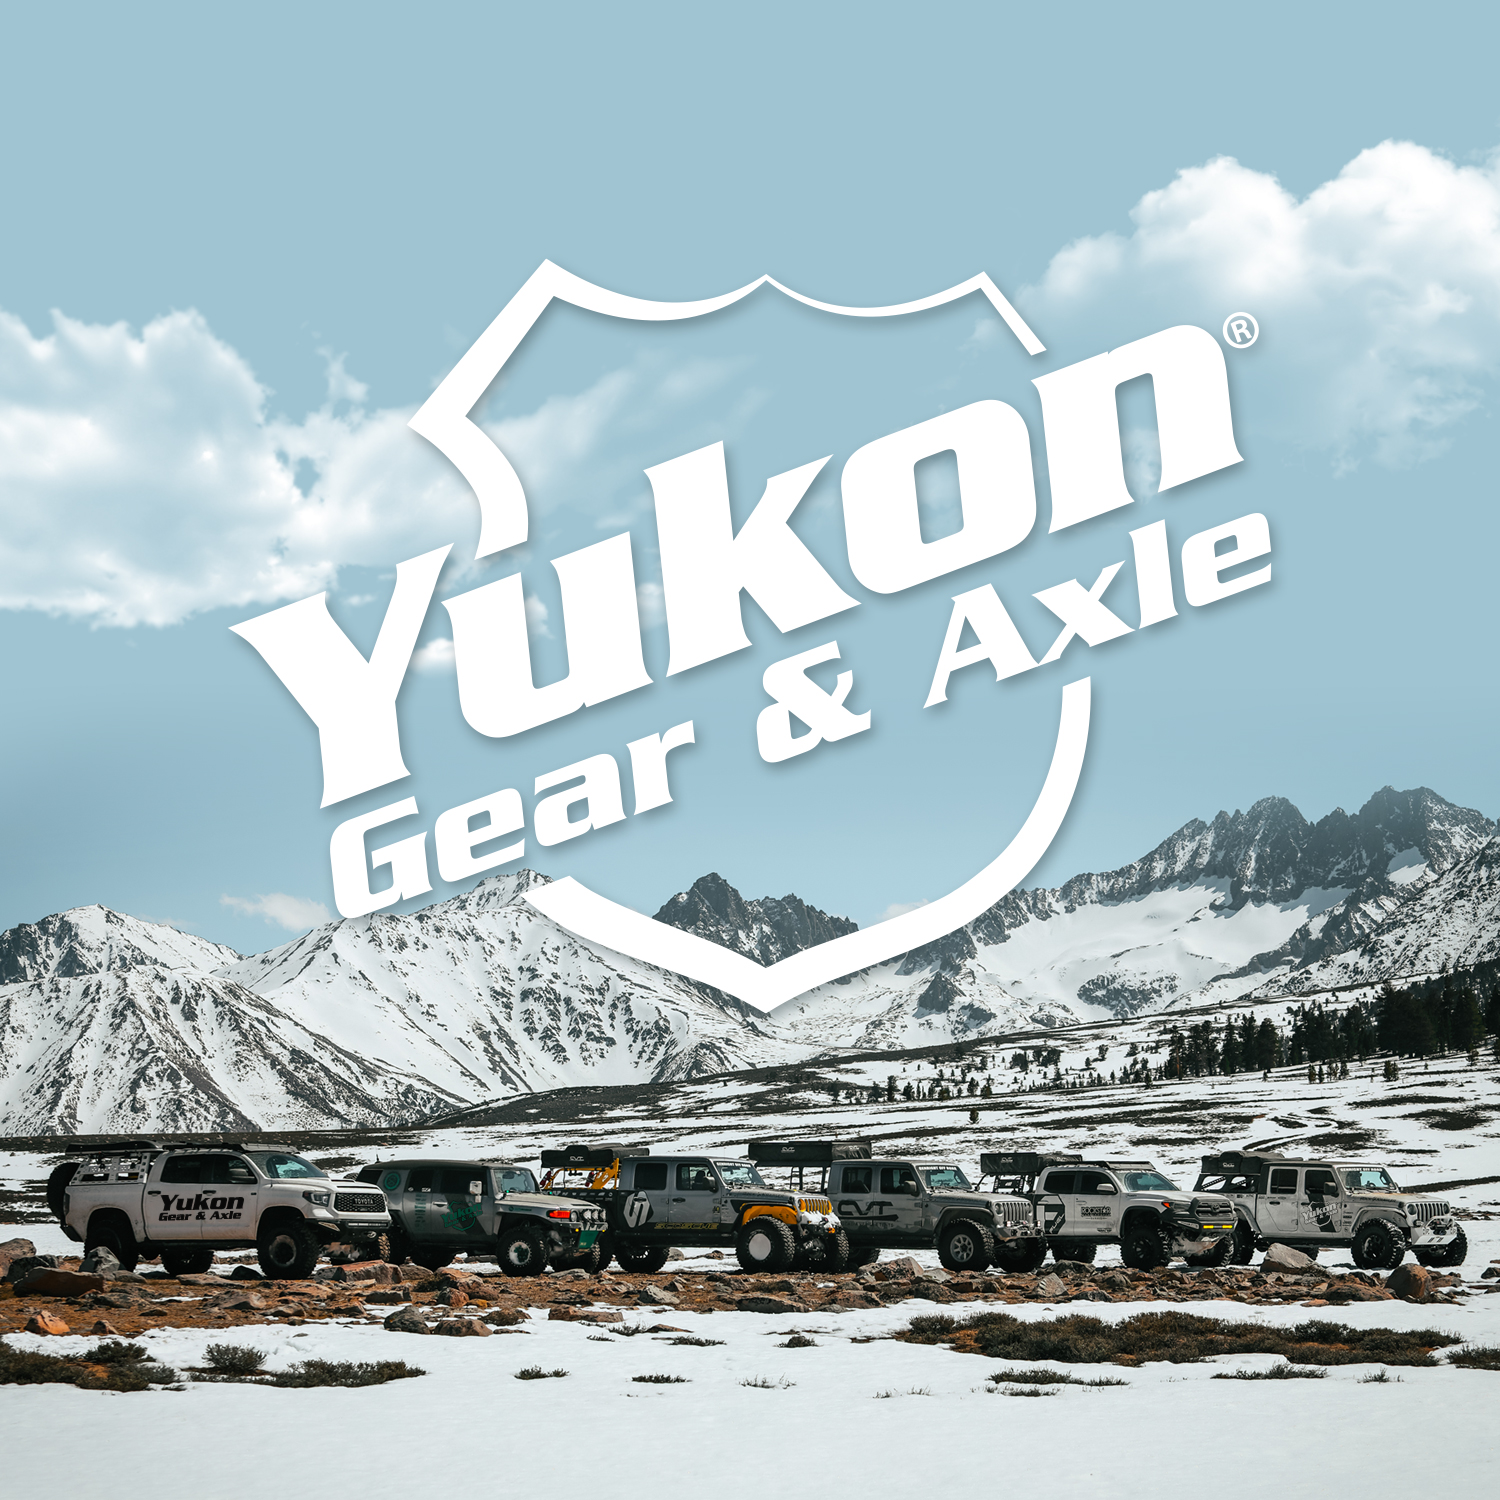 Yukon high performance replacement ring & pinion gear set, Dana 60, 4.56 thick 